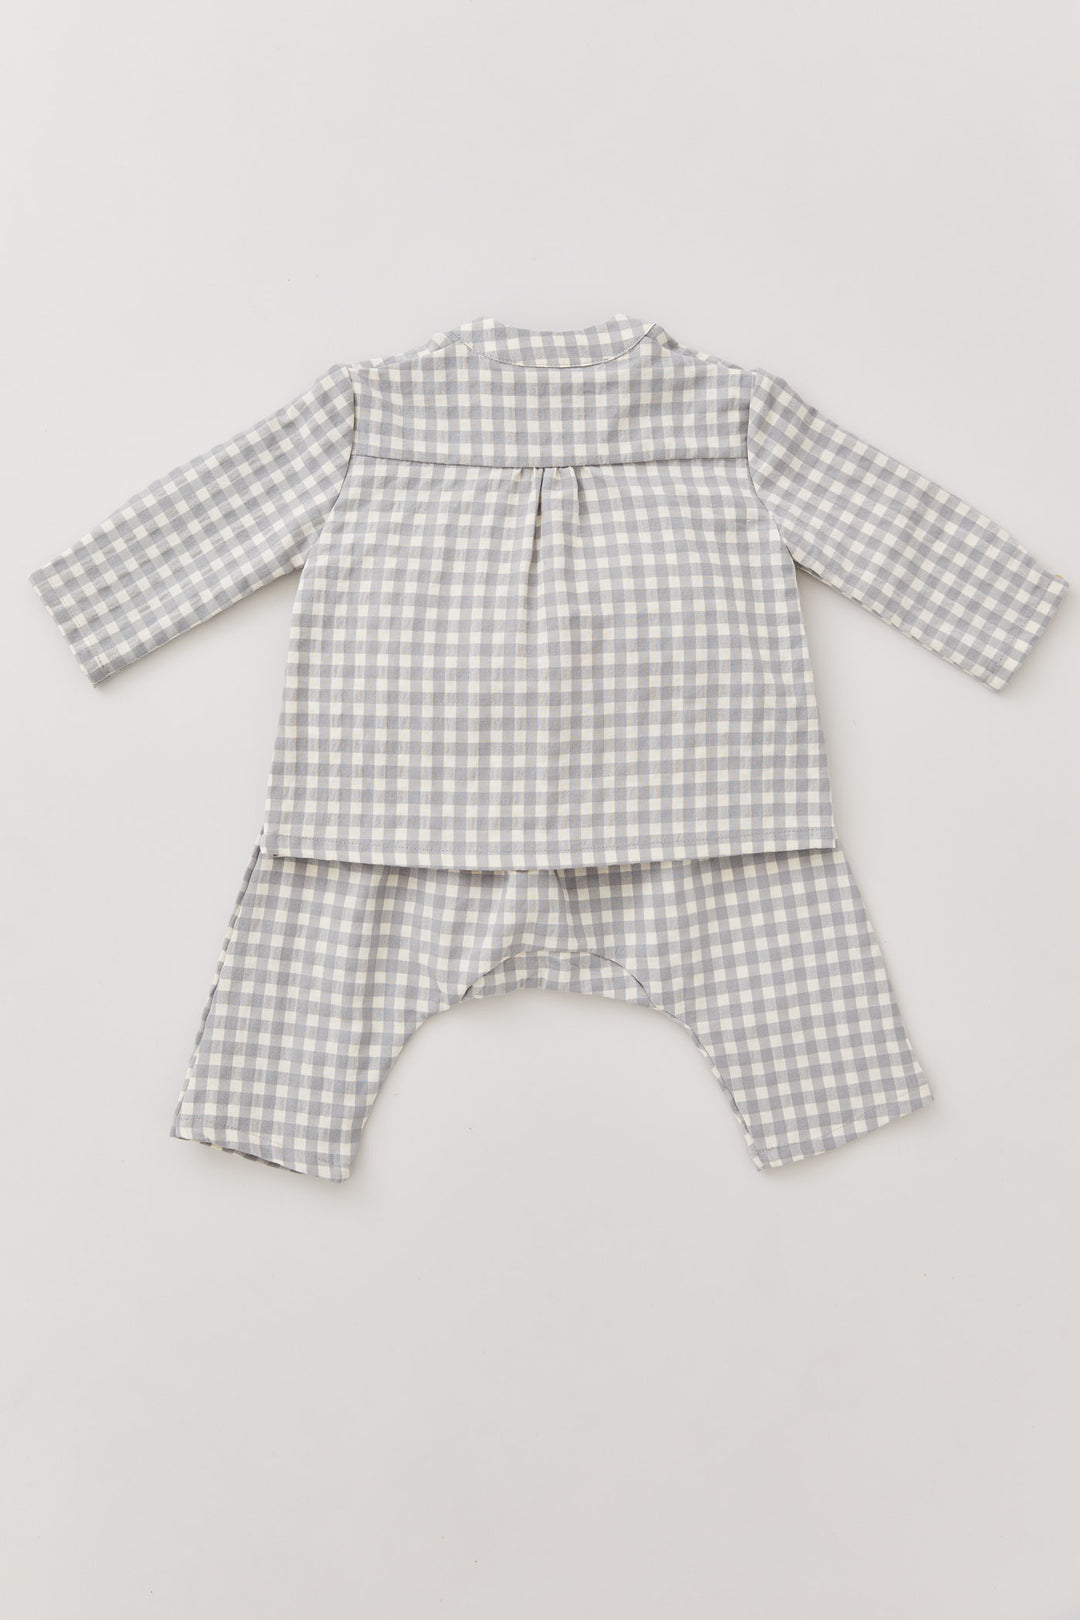 Baby Apple Shirt in Cream Grey Check - Designed by Ingrid Lewis - Strawberries & Cream